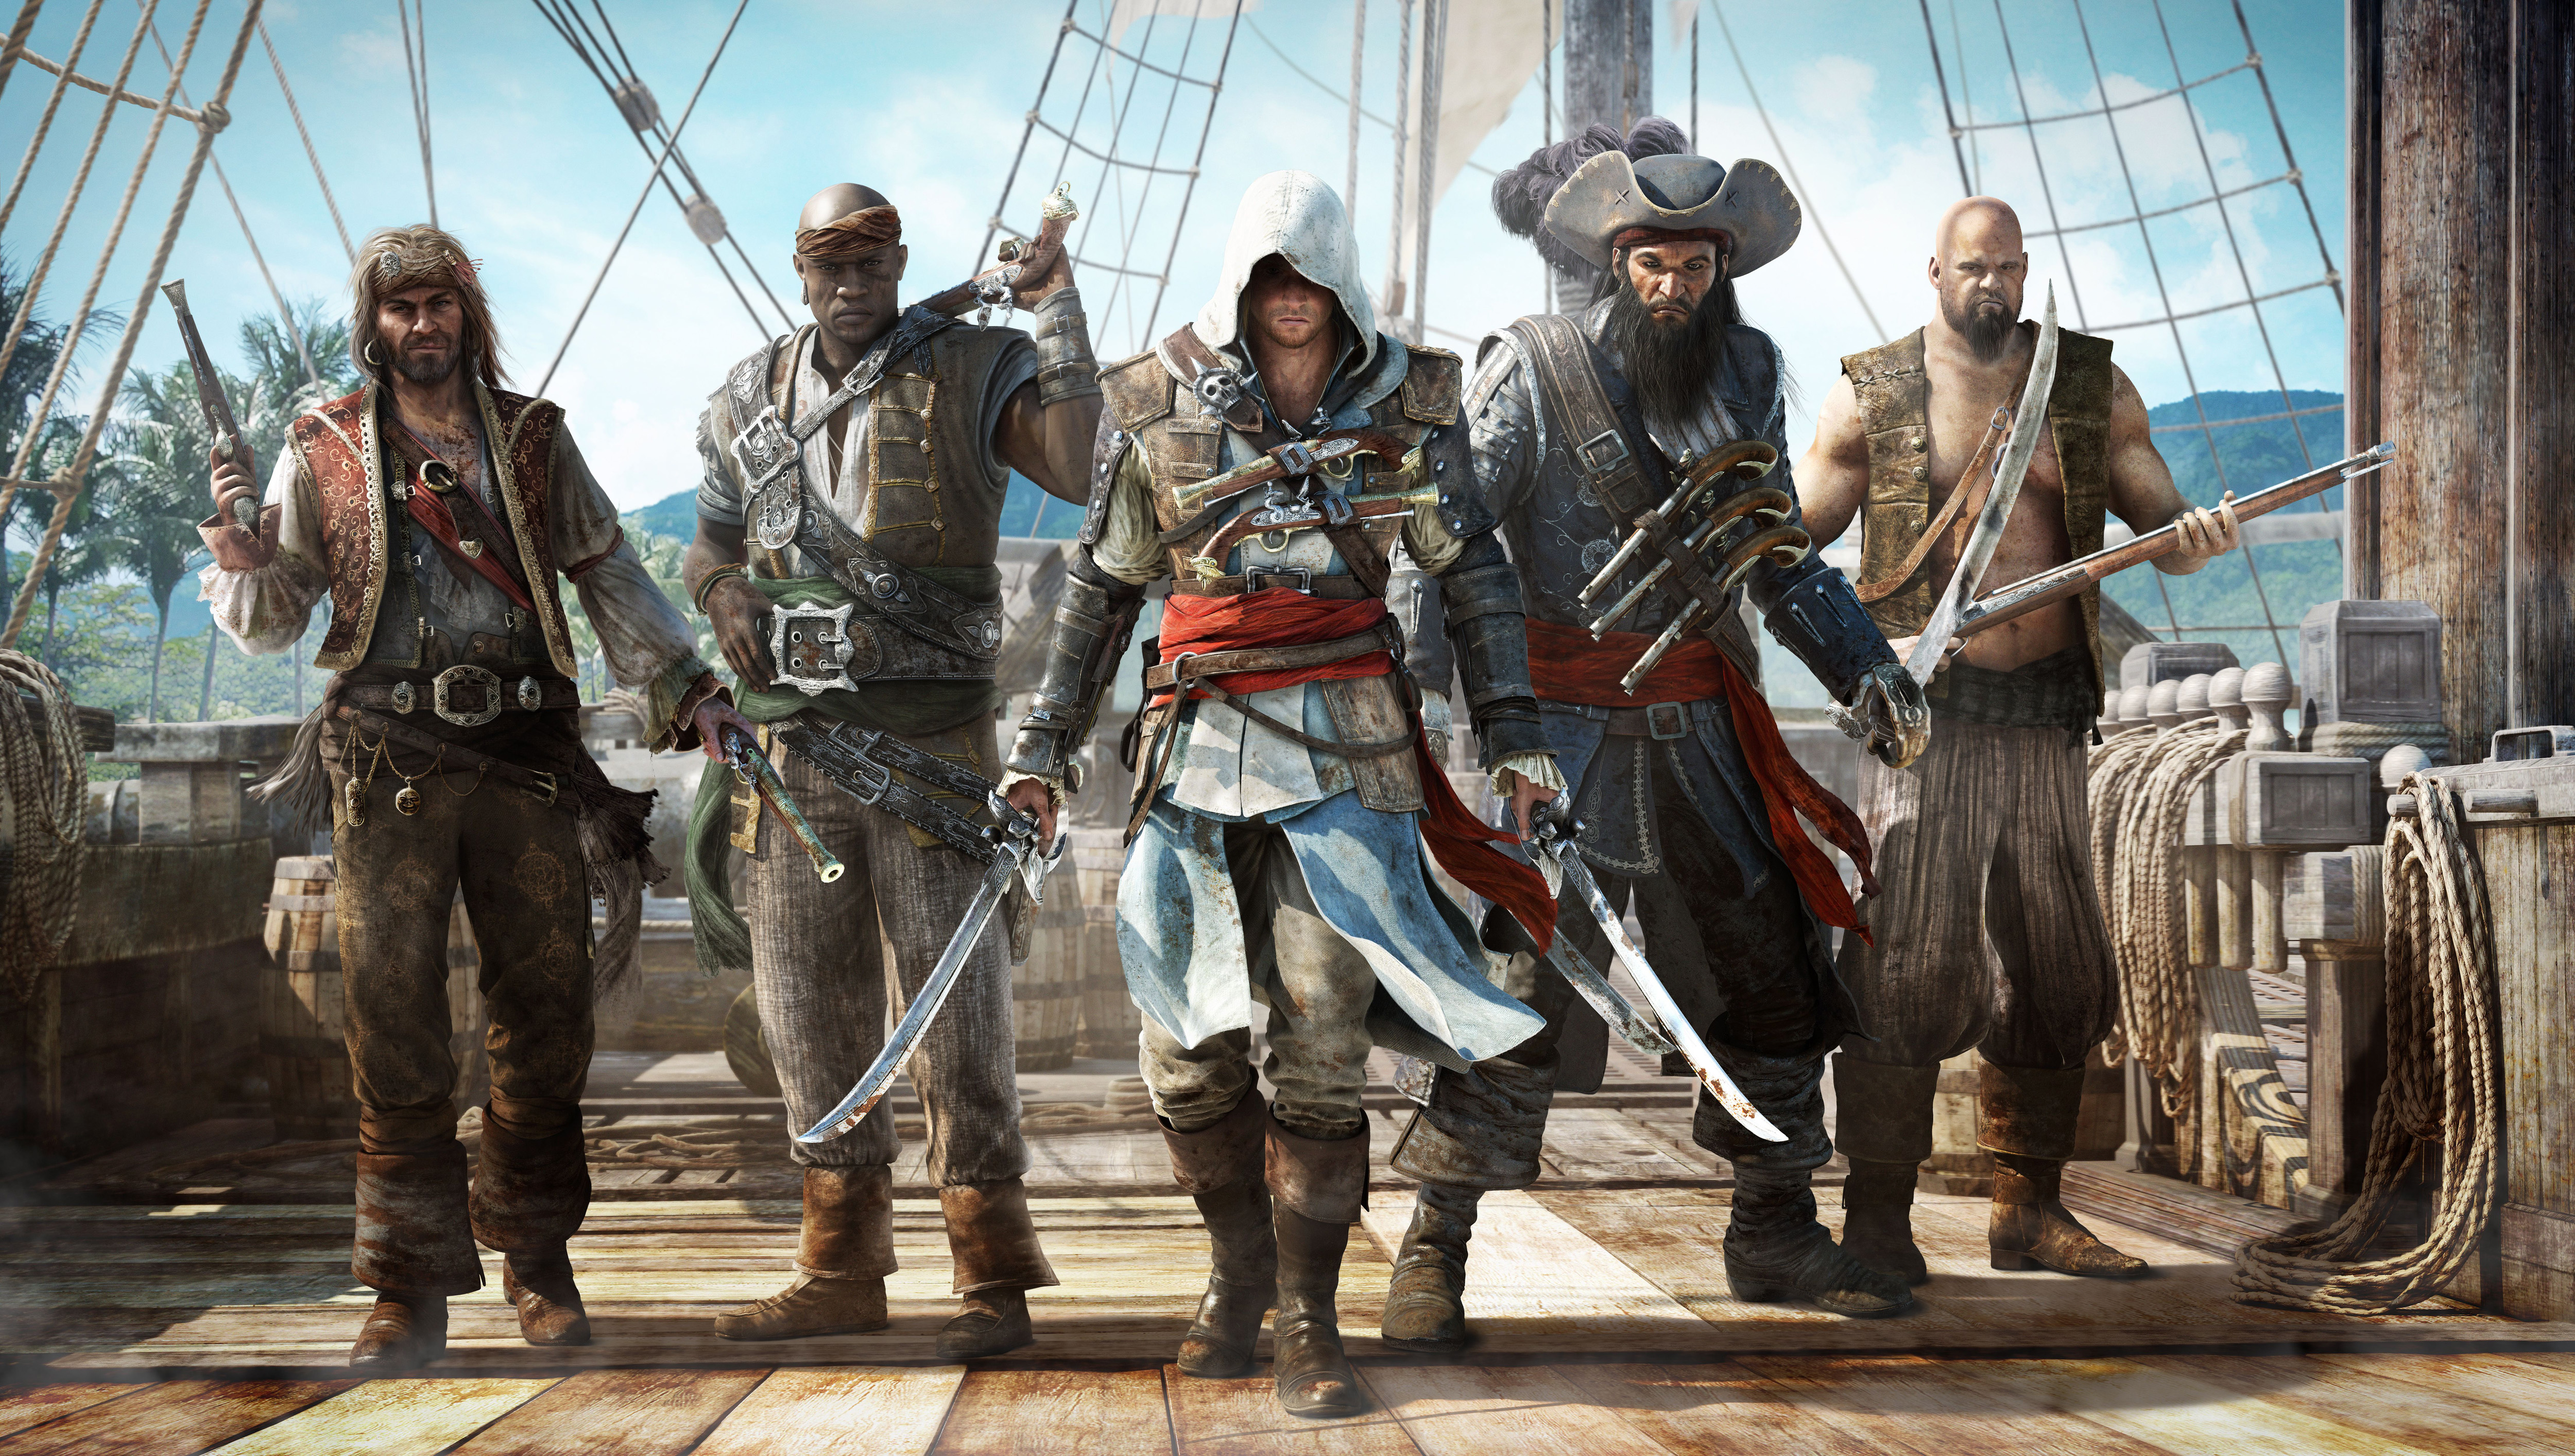 Assassin's Creed IV: Black Flag HD wallpapers, Desktop wallpaper - most viewed